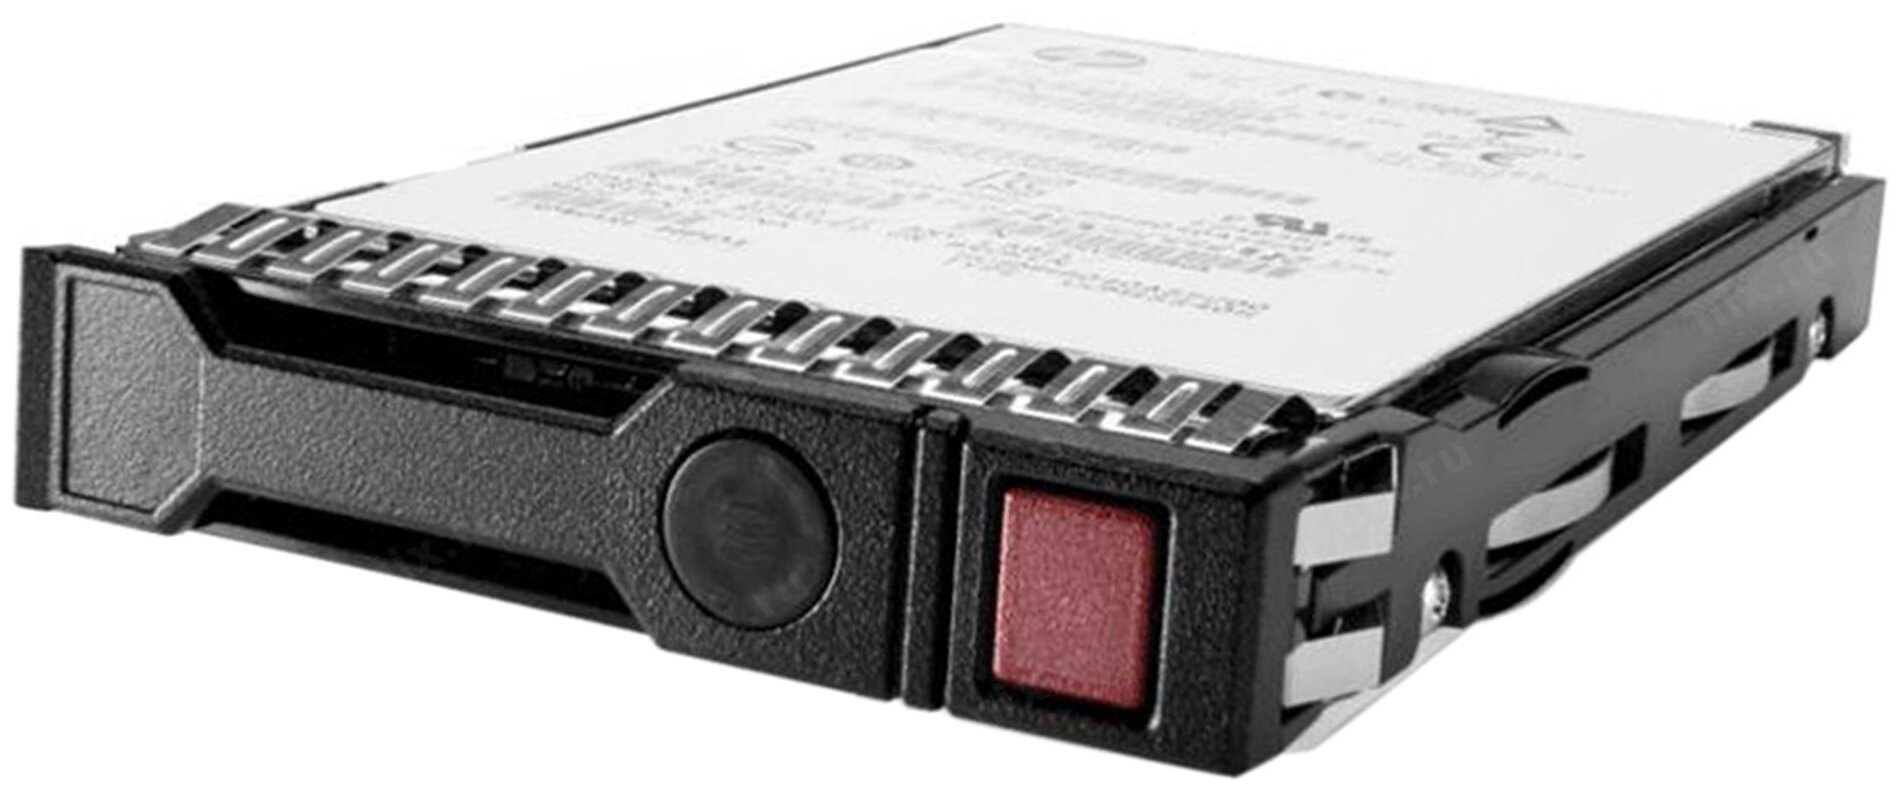 Накопитель на жестком магнитном диске HPE HPE 960GB Sata 6G Read Intensive SFF (2.5in) SC 3yr Wty Mu